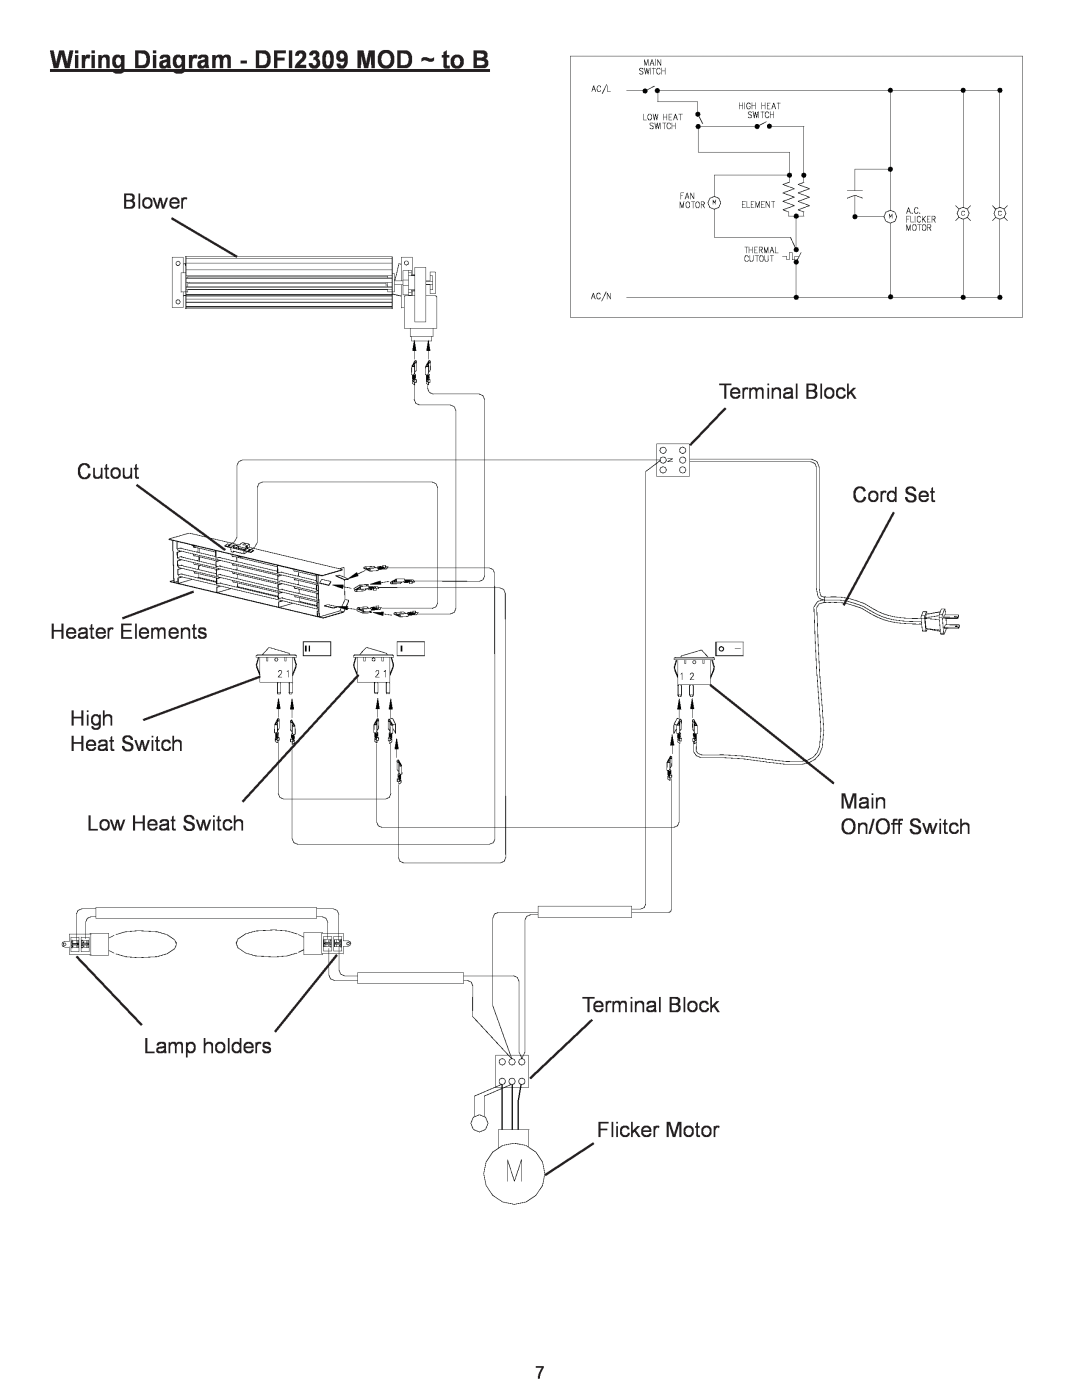 Dimplex Dimplex DFI2309 Wiring Diagram - DFI2309 MOD ~ to B, Blower Cutout Heater Elements, High, Heat Switch 